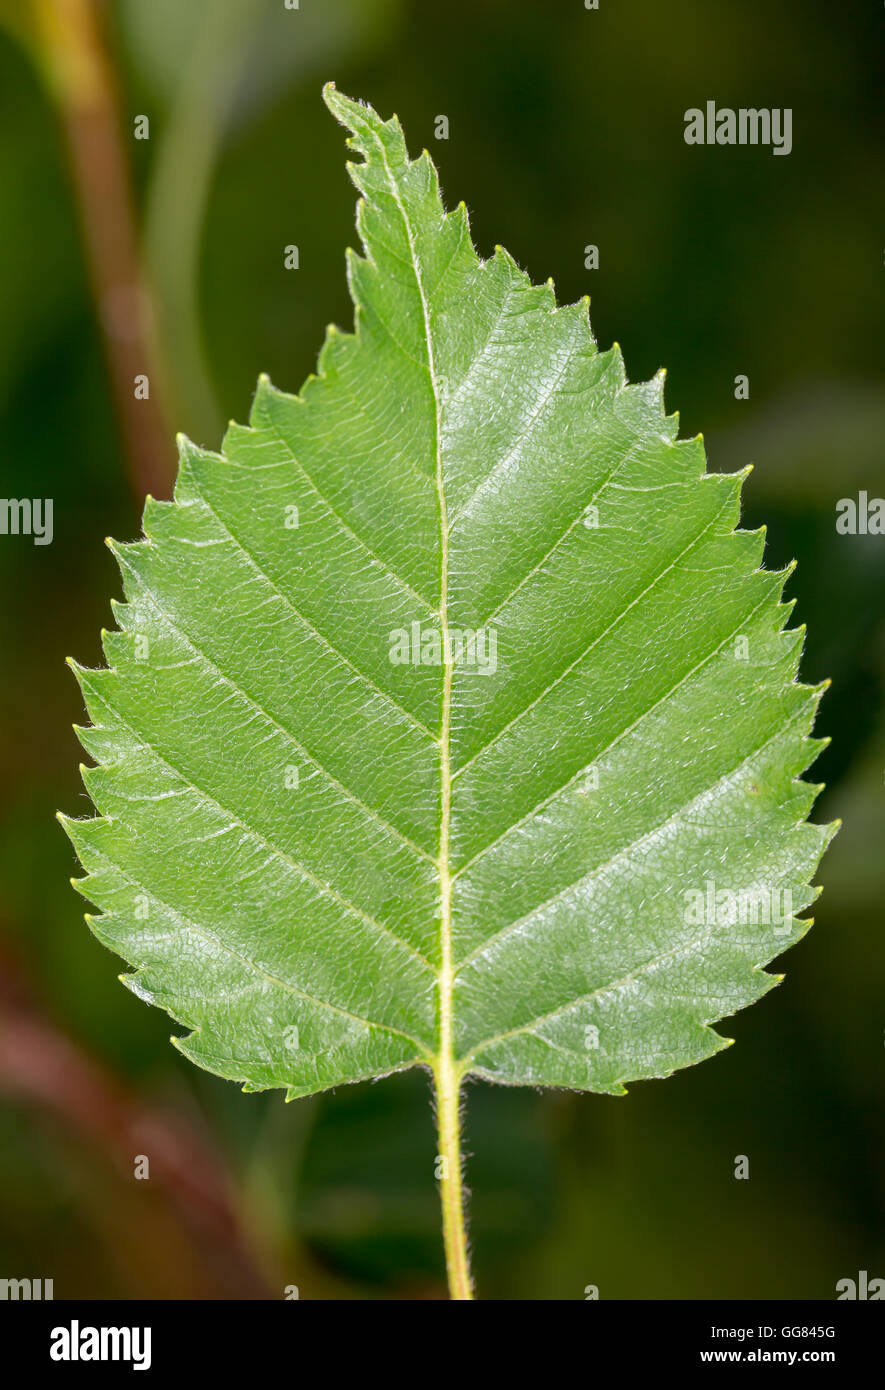 Kamchatka Birch Leaf close up. Stock Photo